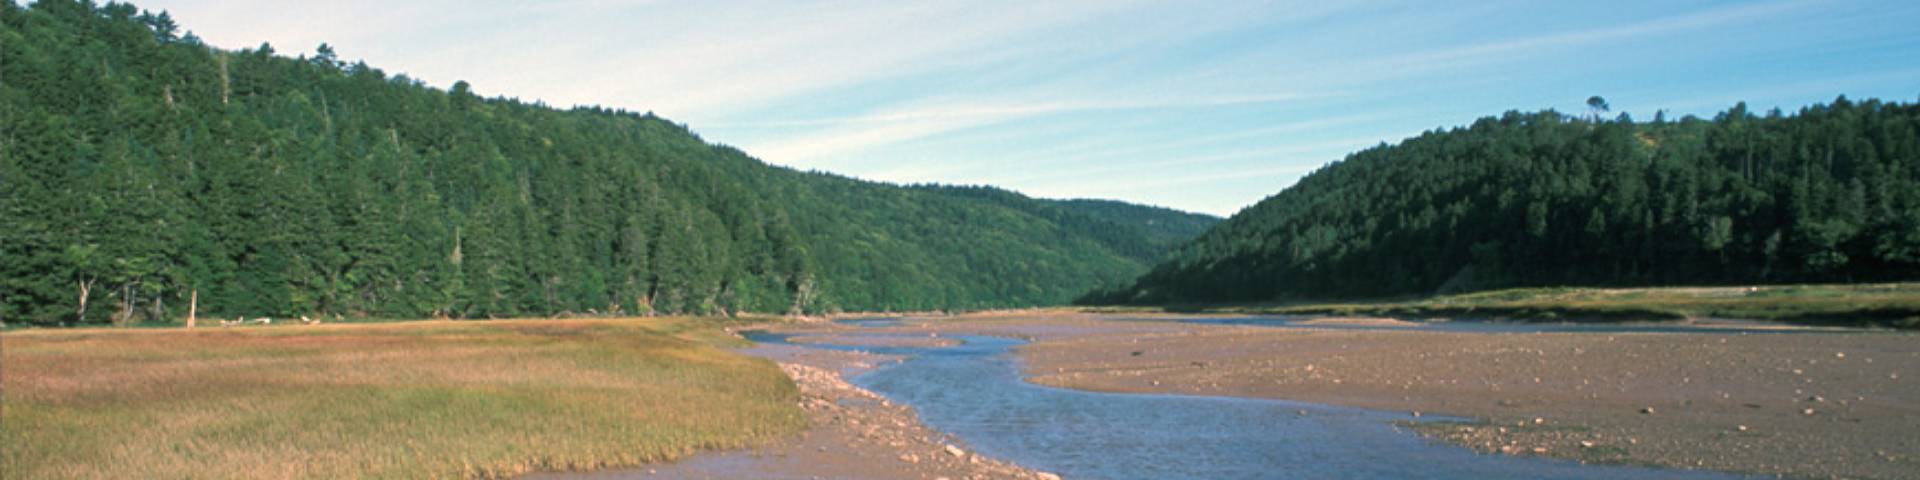 Rivière Upper Salmon